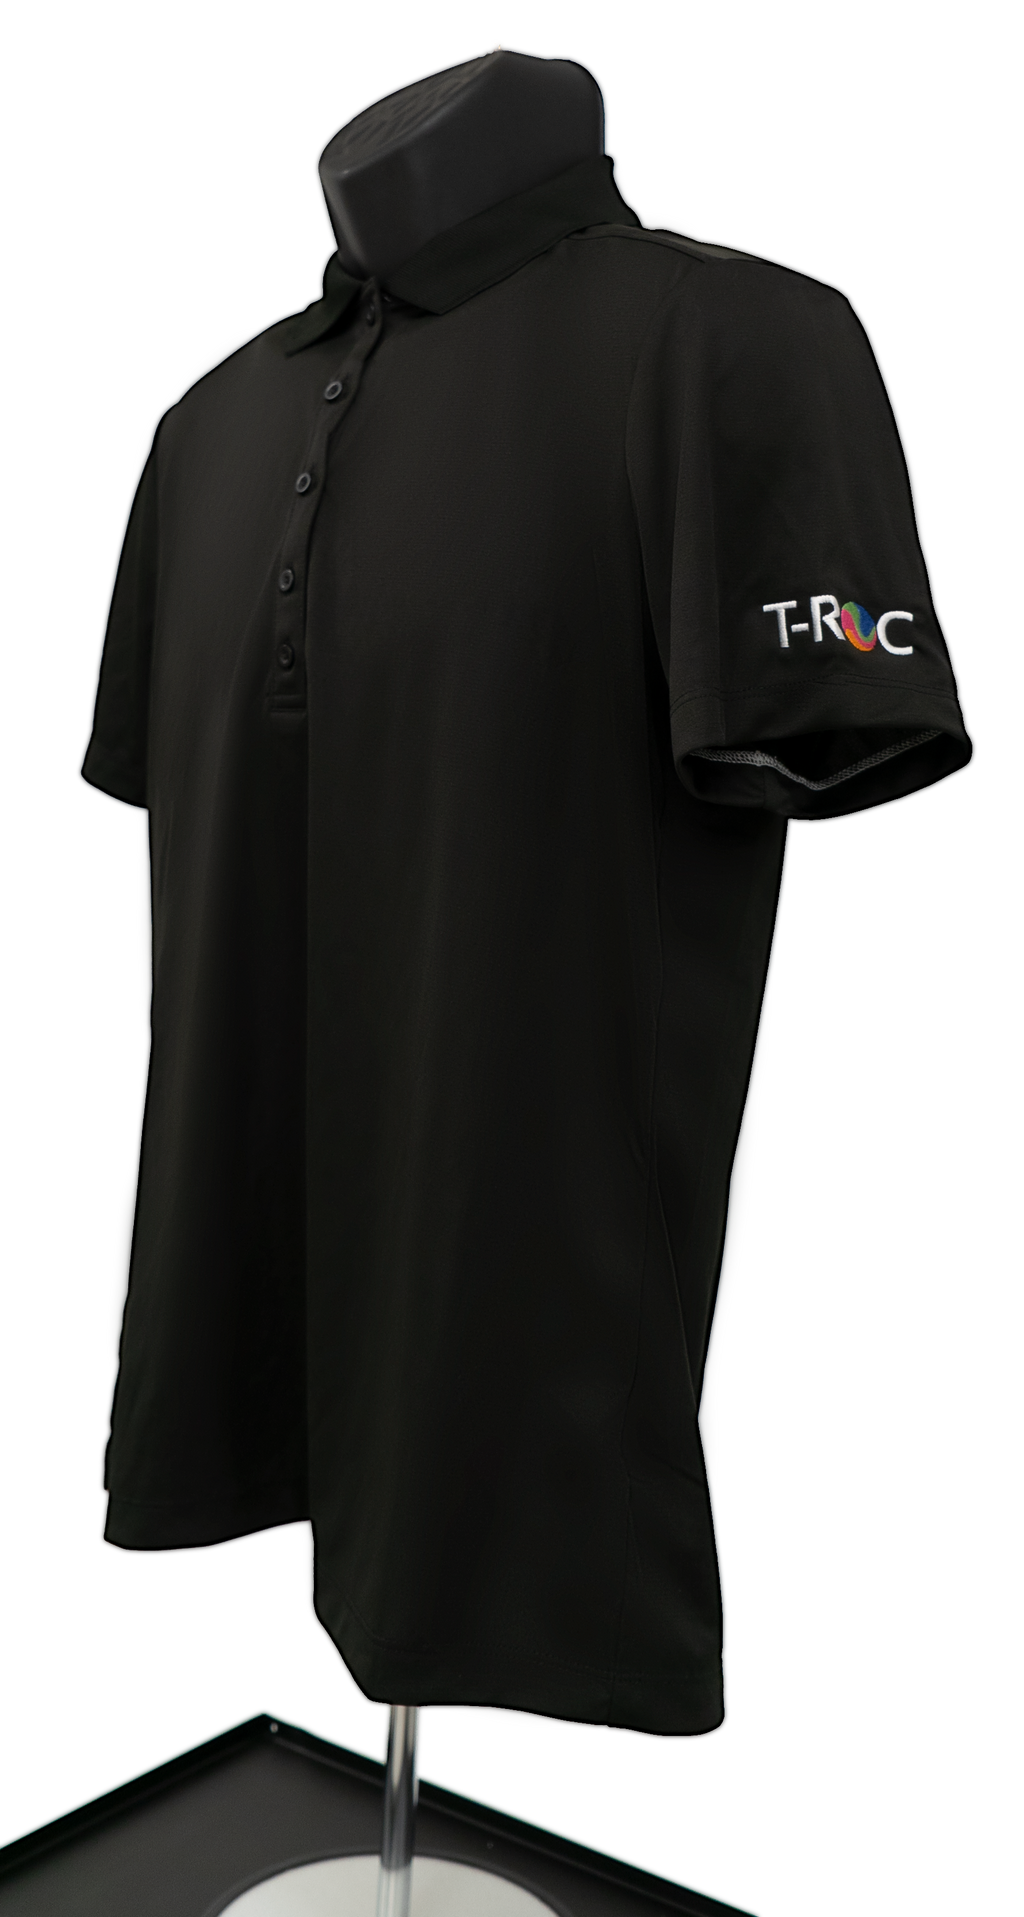 Women's Black T-ROC Polo. Logo on sleeve - T-ROC Store